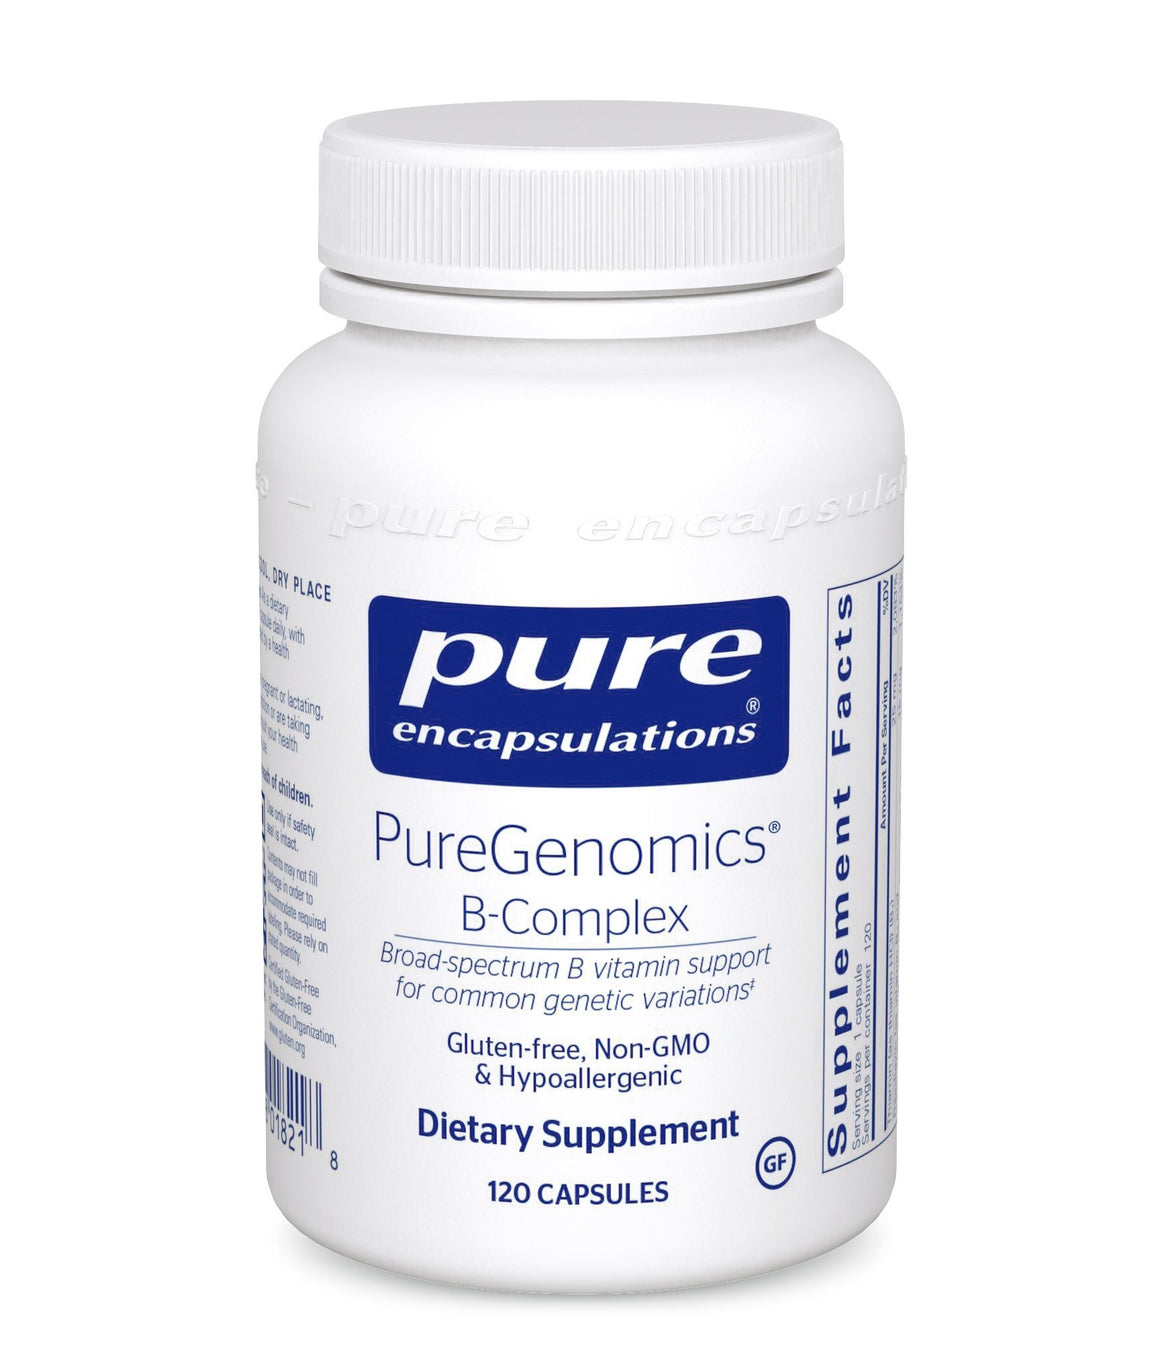 A bottle of Pure PureGenomics® B-Complex